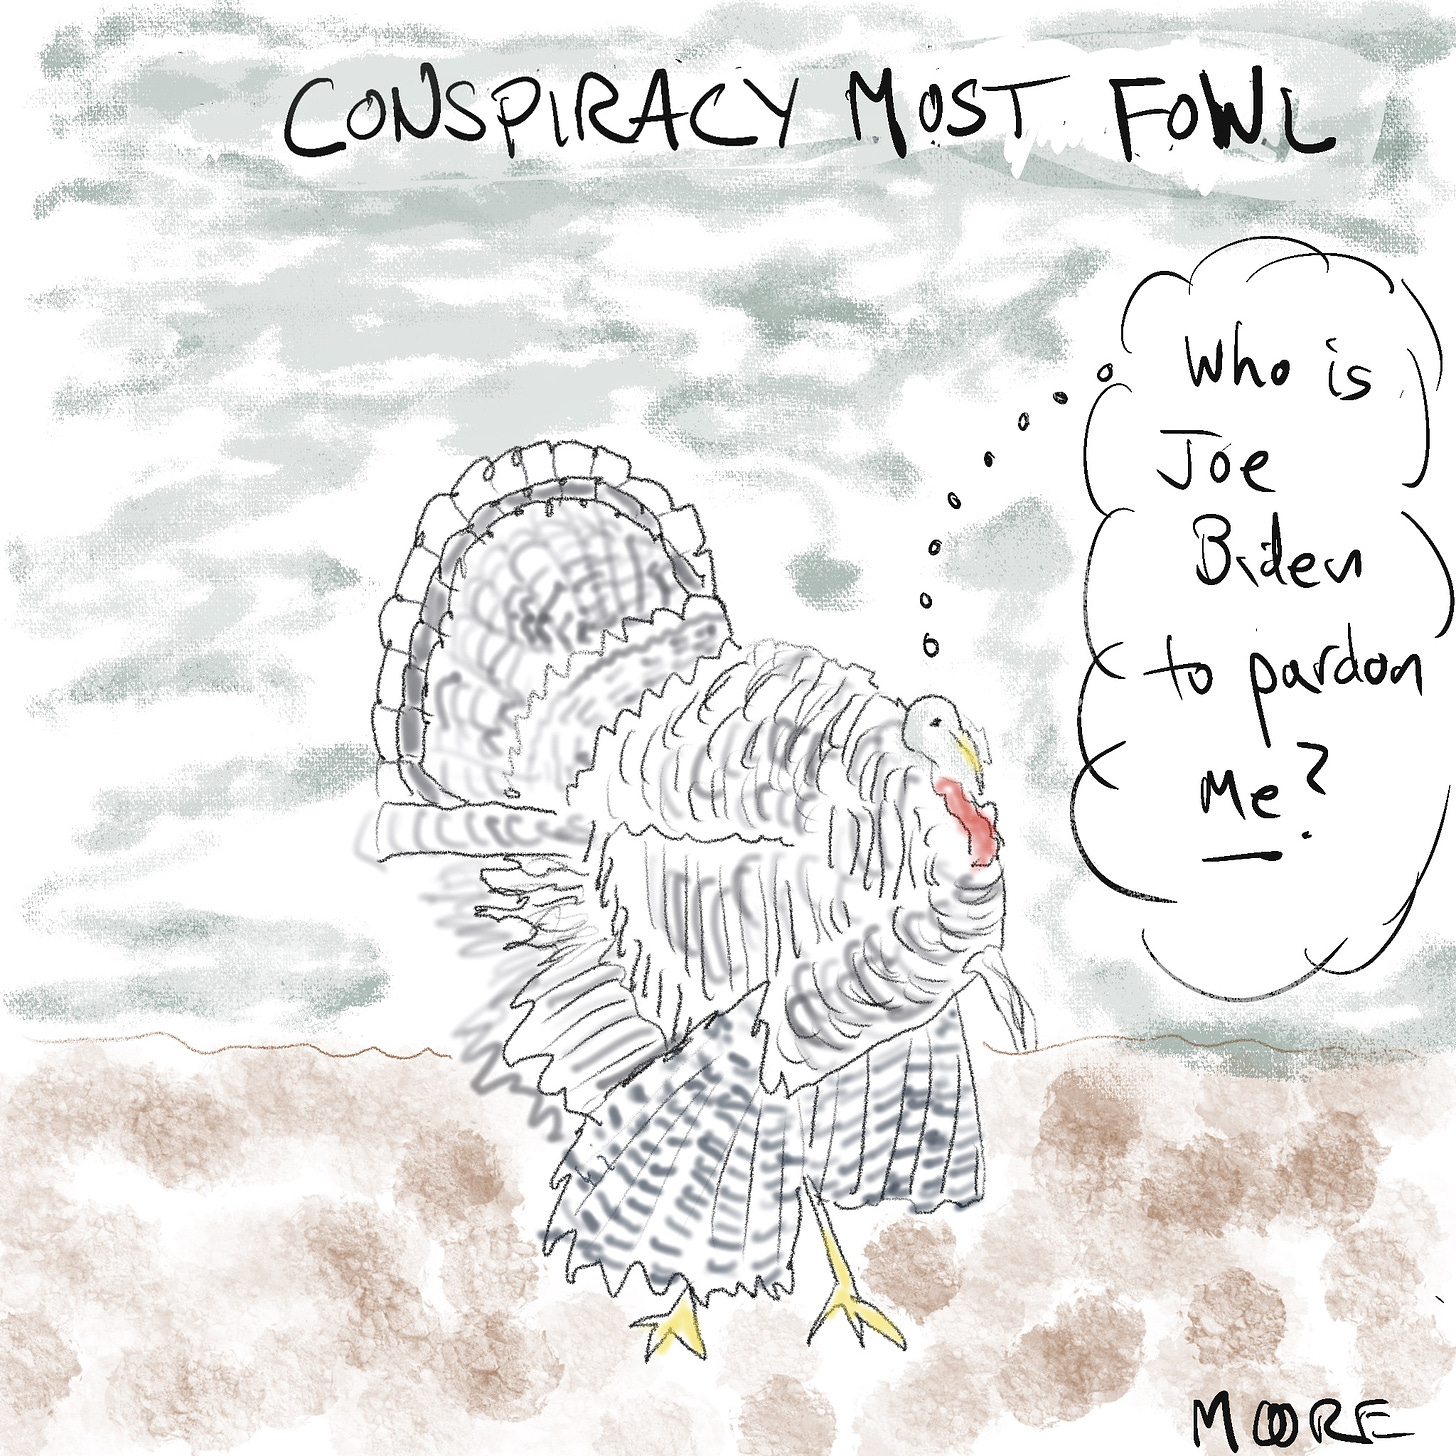 Conspiracy-minded turkey